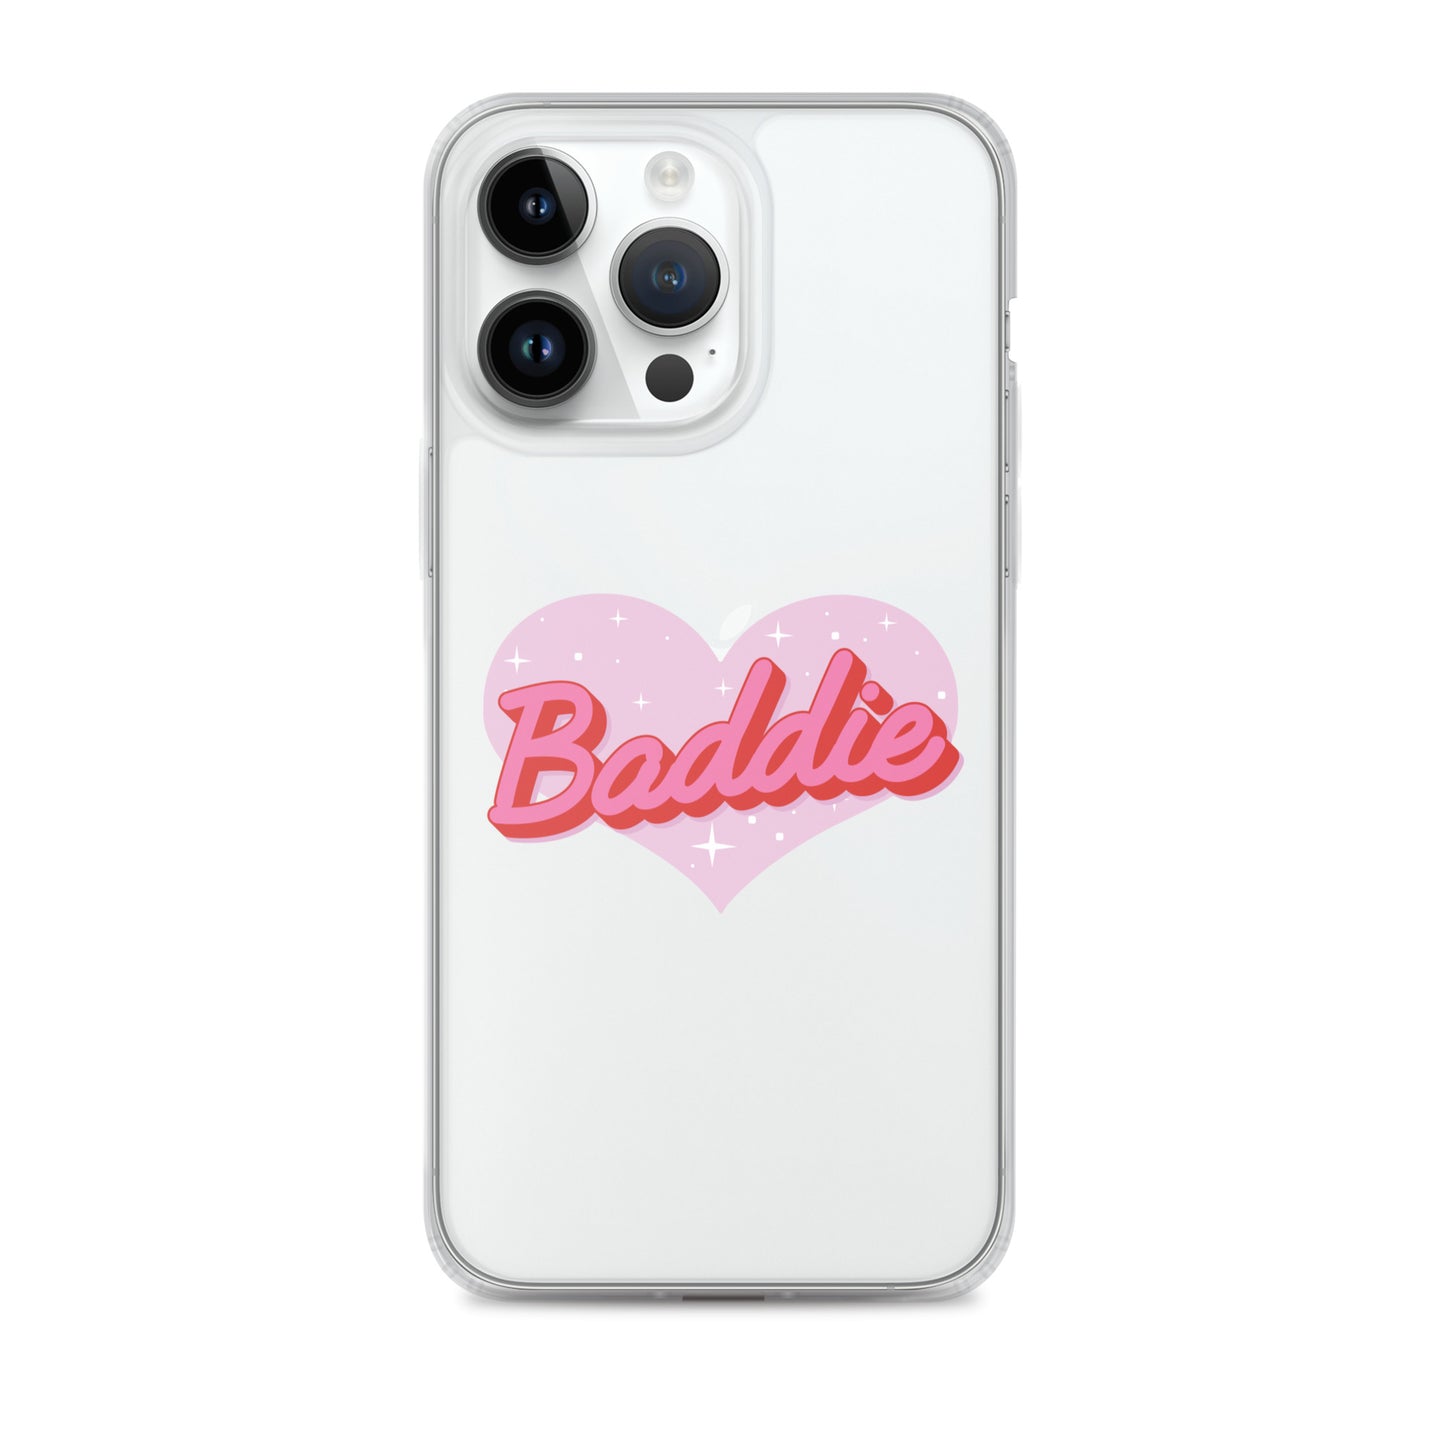 Baddie iPhone Case